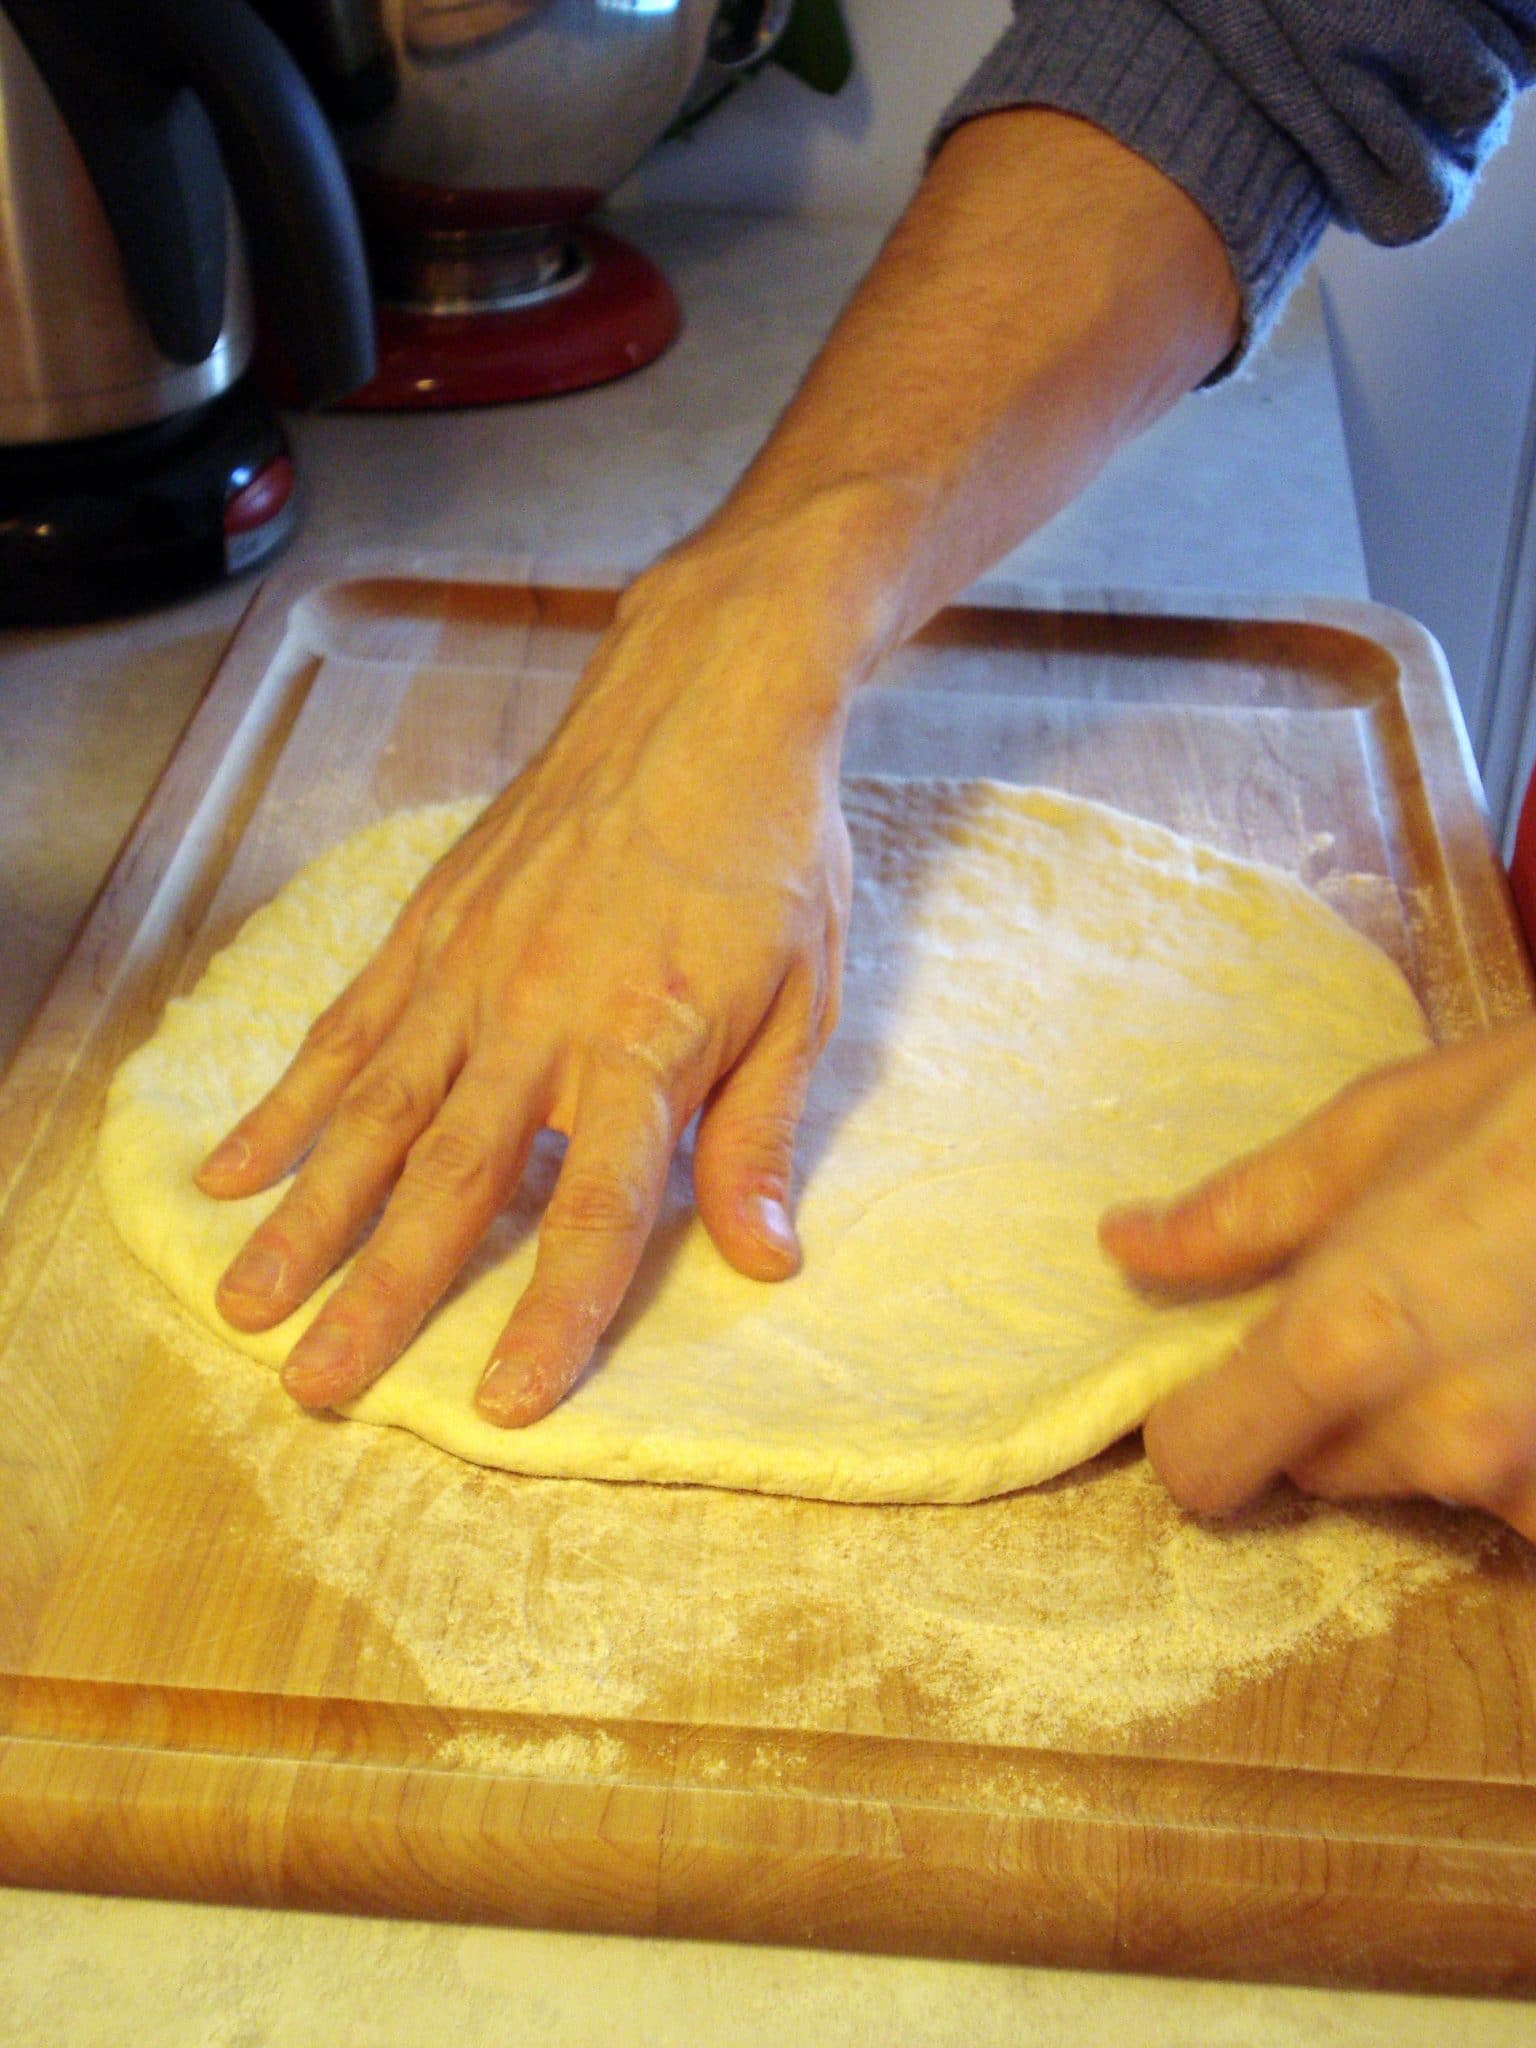 Man kneading pizza dough on kitchen counter